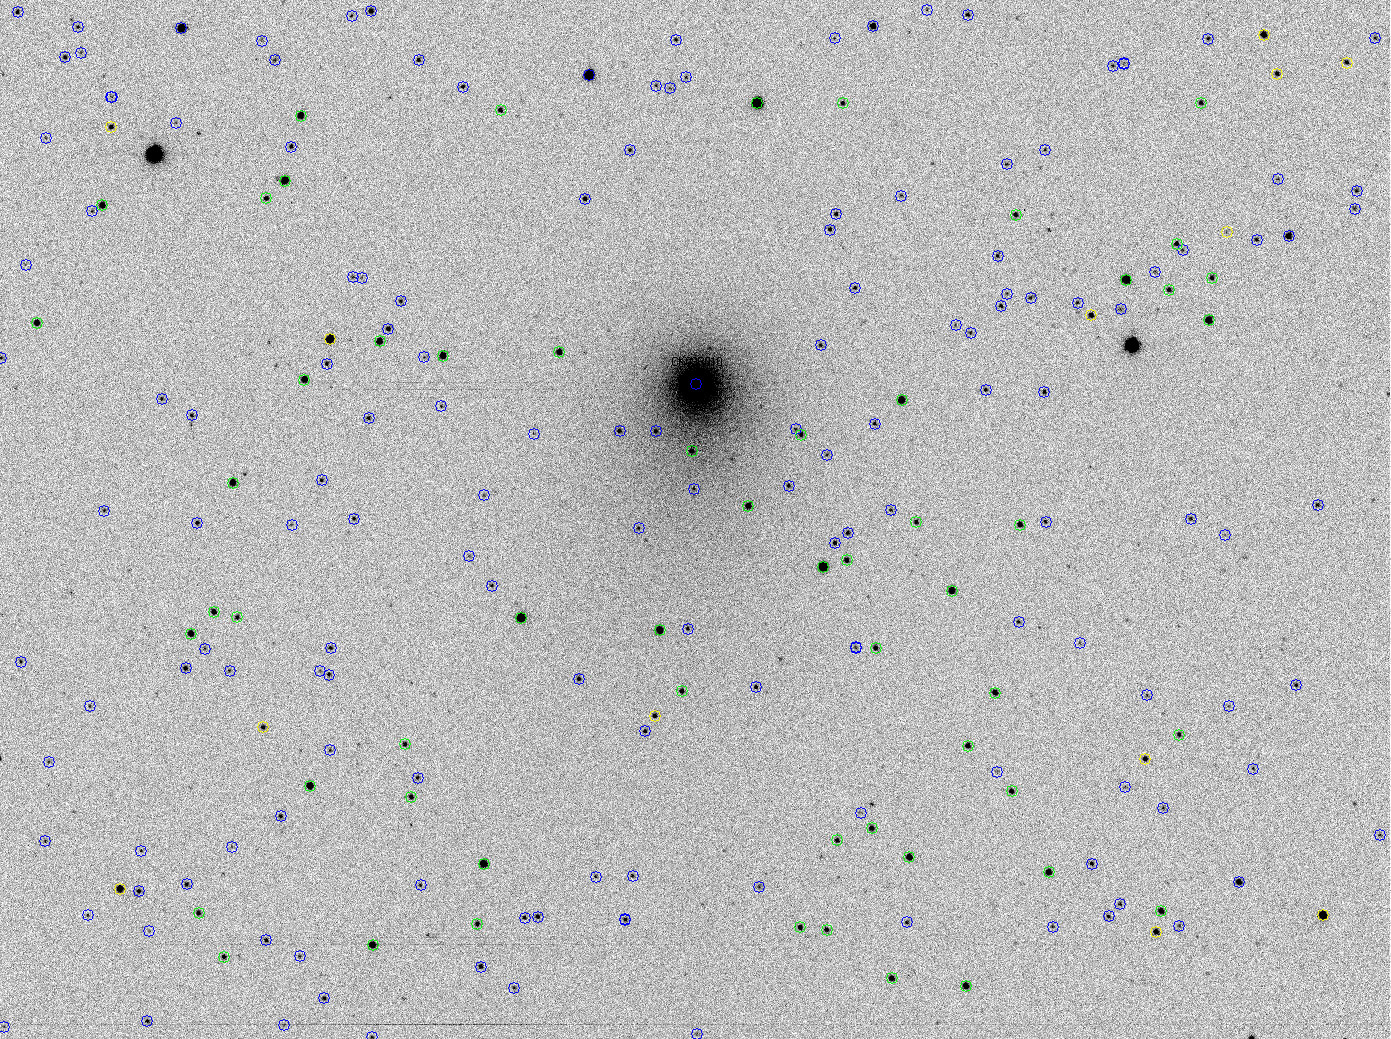 Komet C/2009 P1